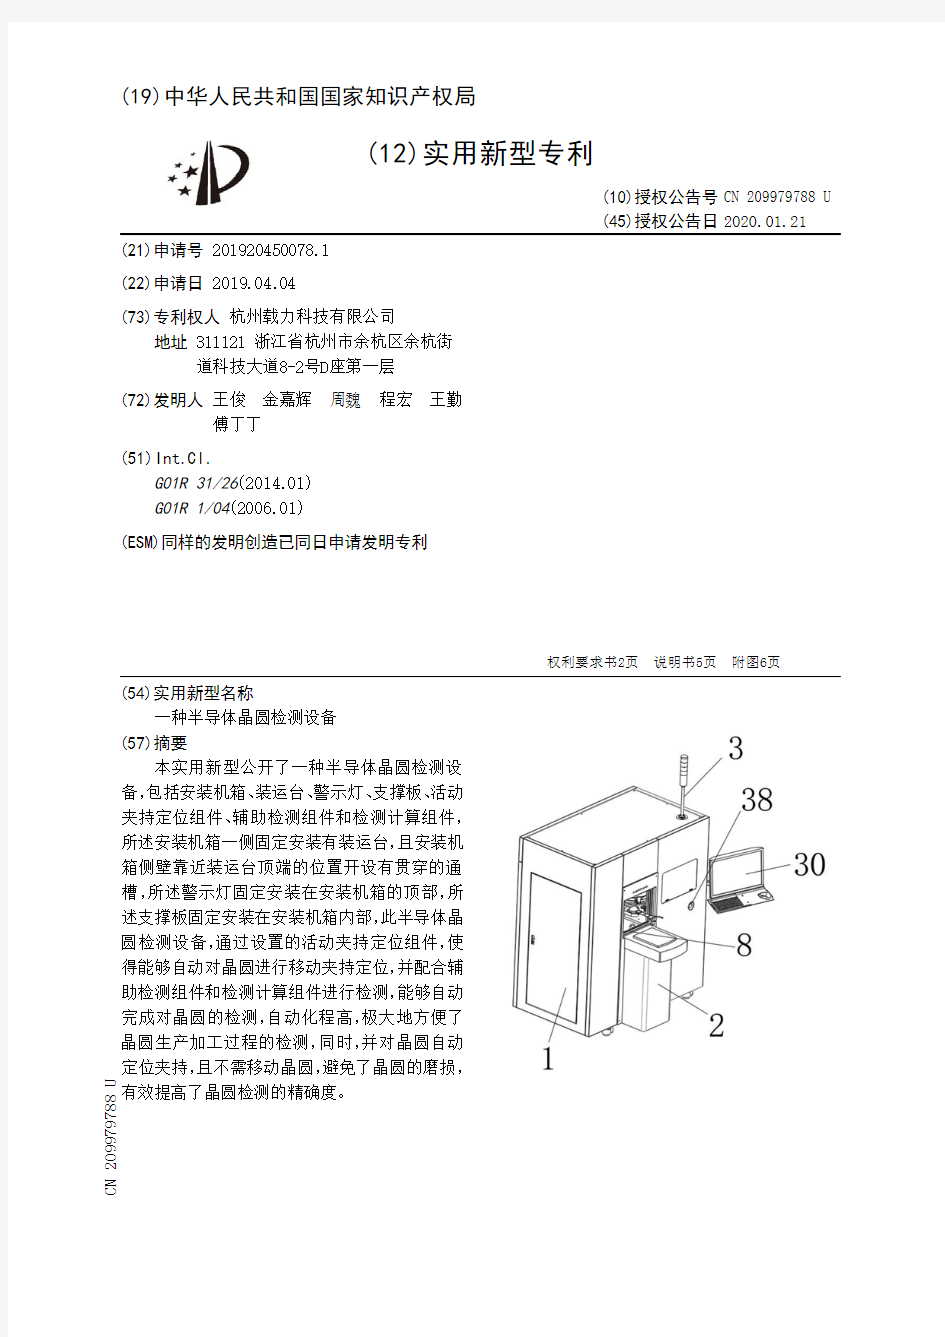 【CN209979788U】一种半导体晶圆检测设备【专利】